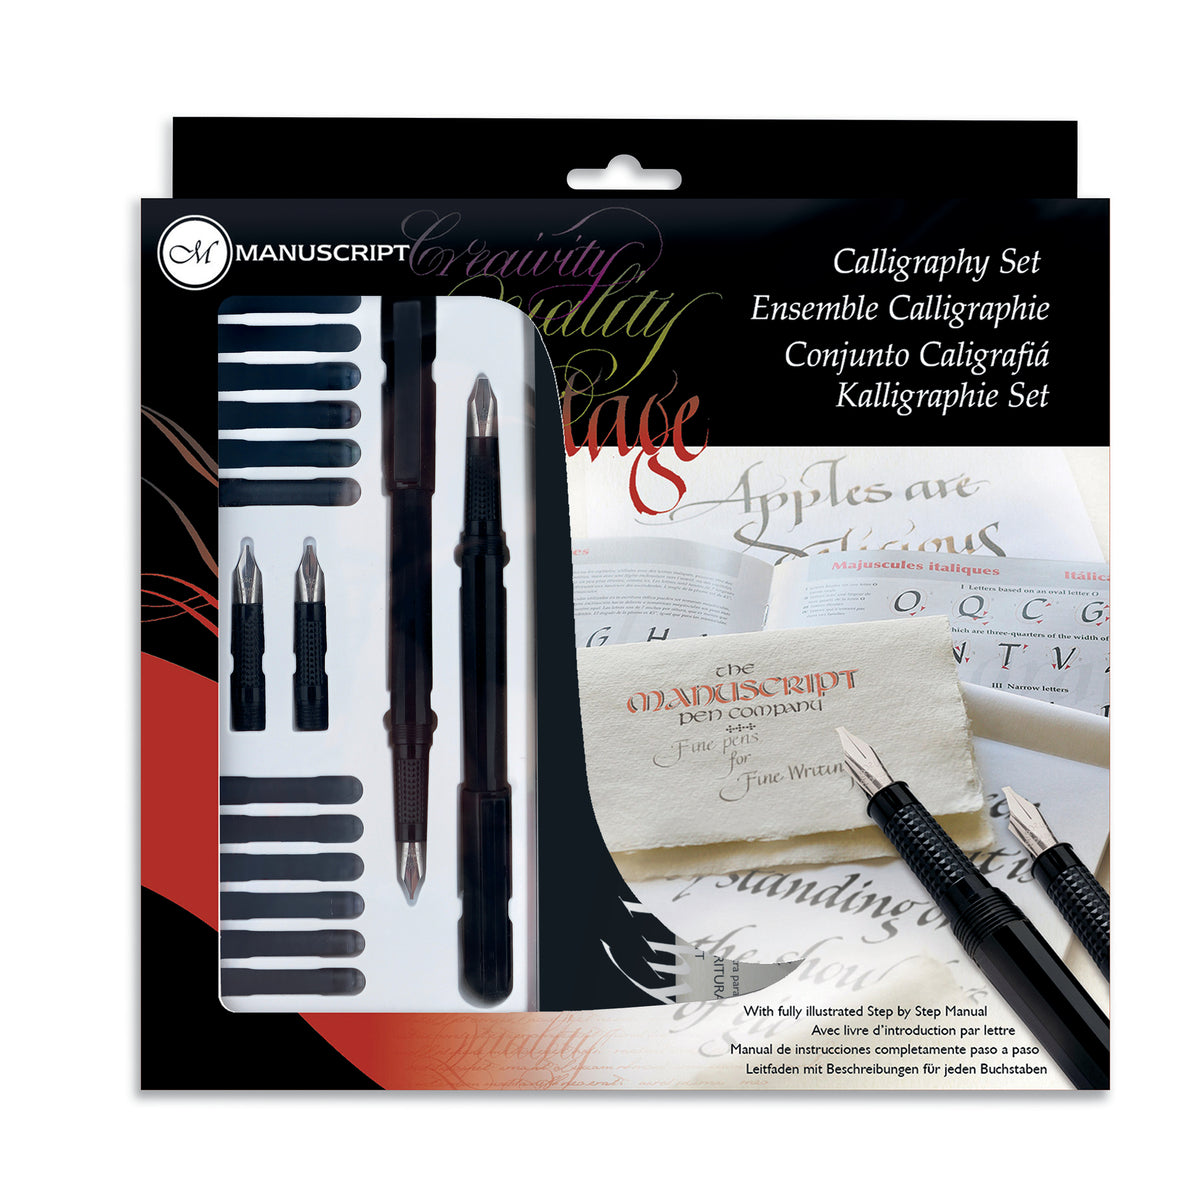 NC Quill Pen Ink Set, Including Quill pen, Glass Pen, Wooden Pen